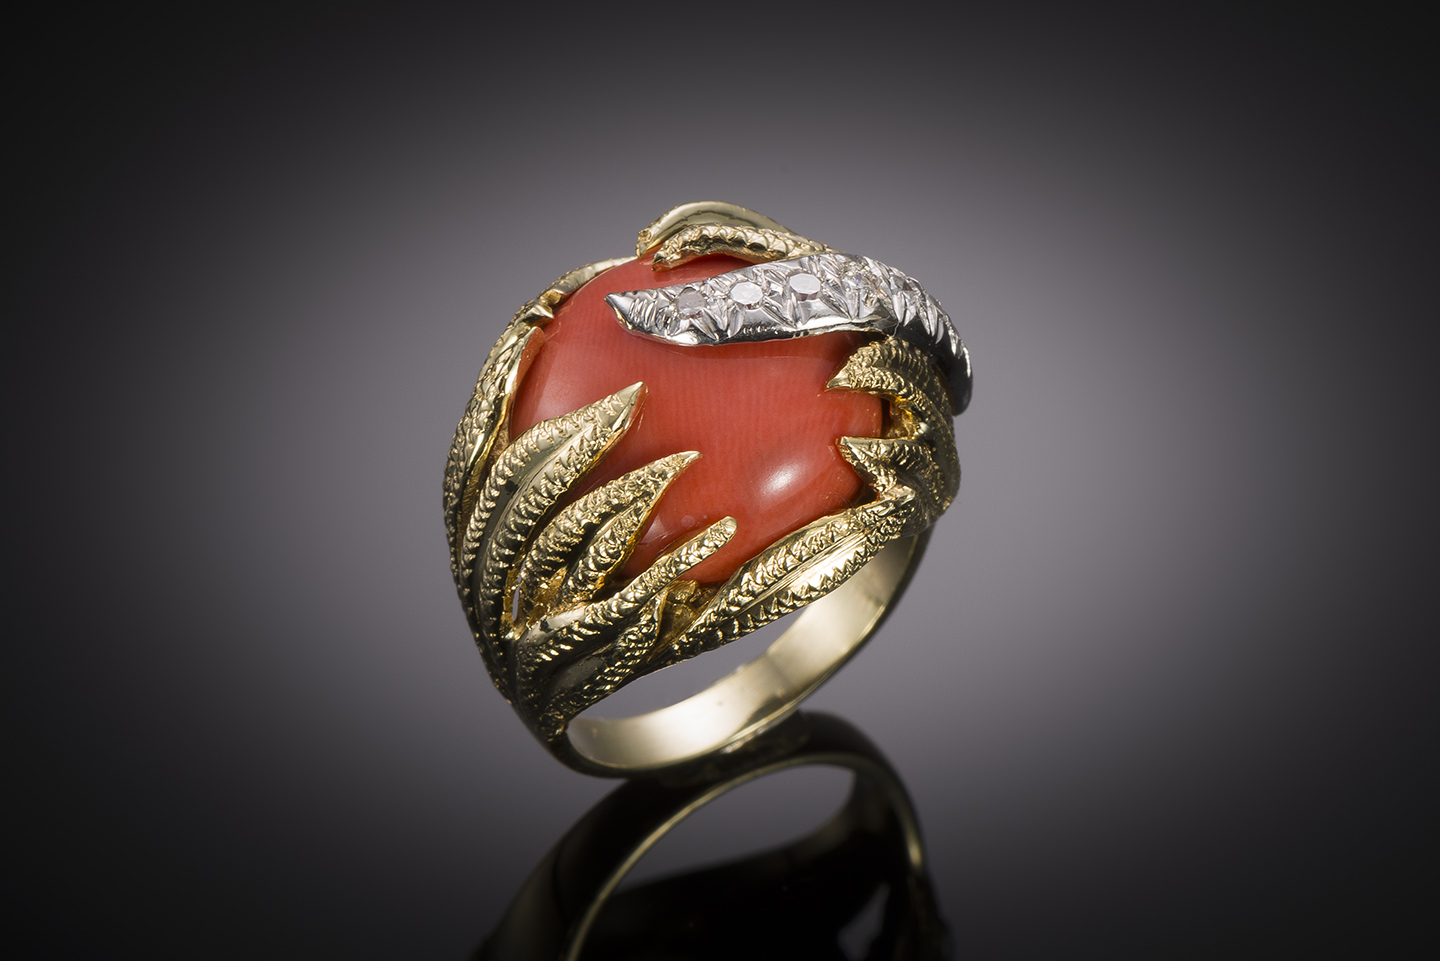 Vintage coral and diamond ring circa 1960 – 1970-1